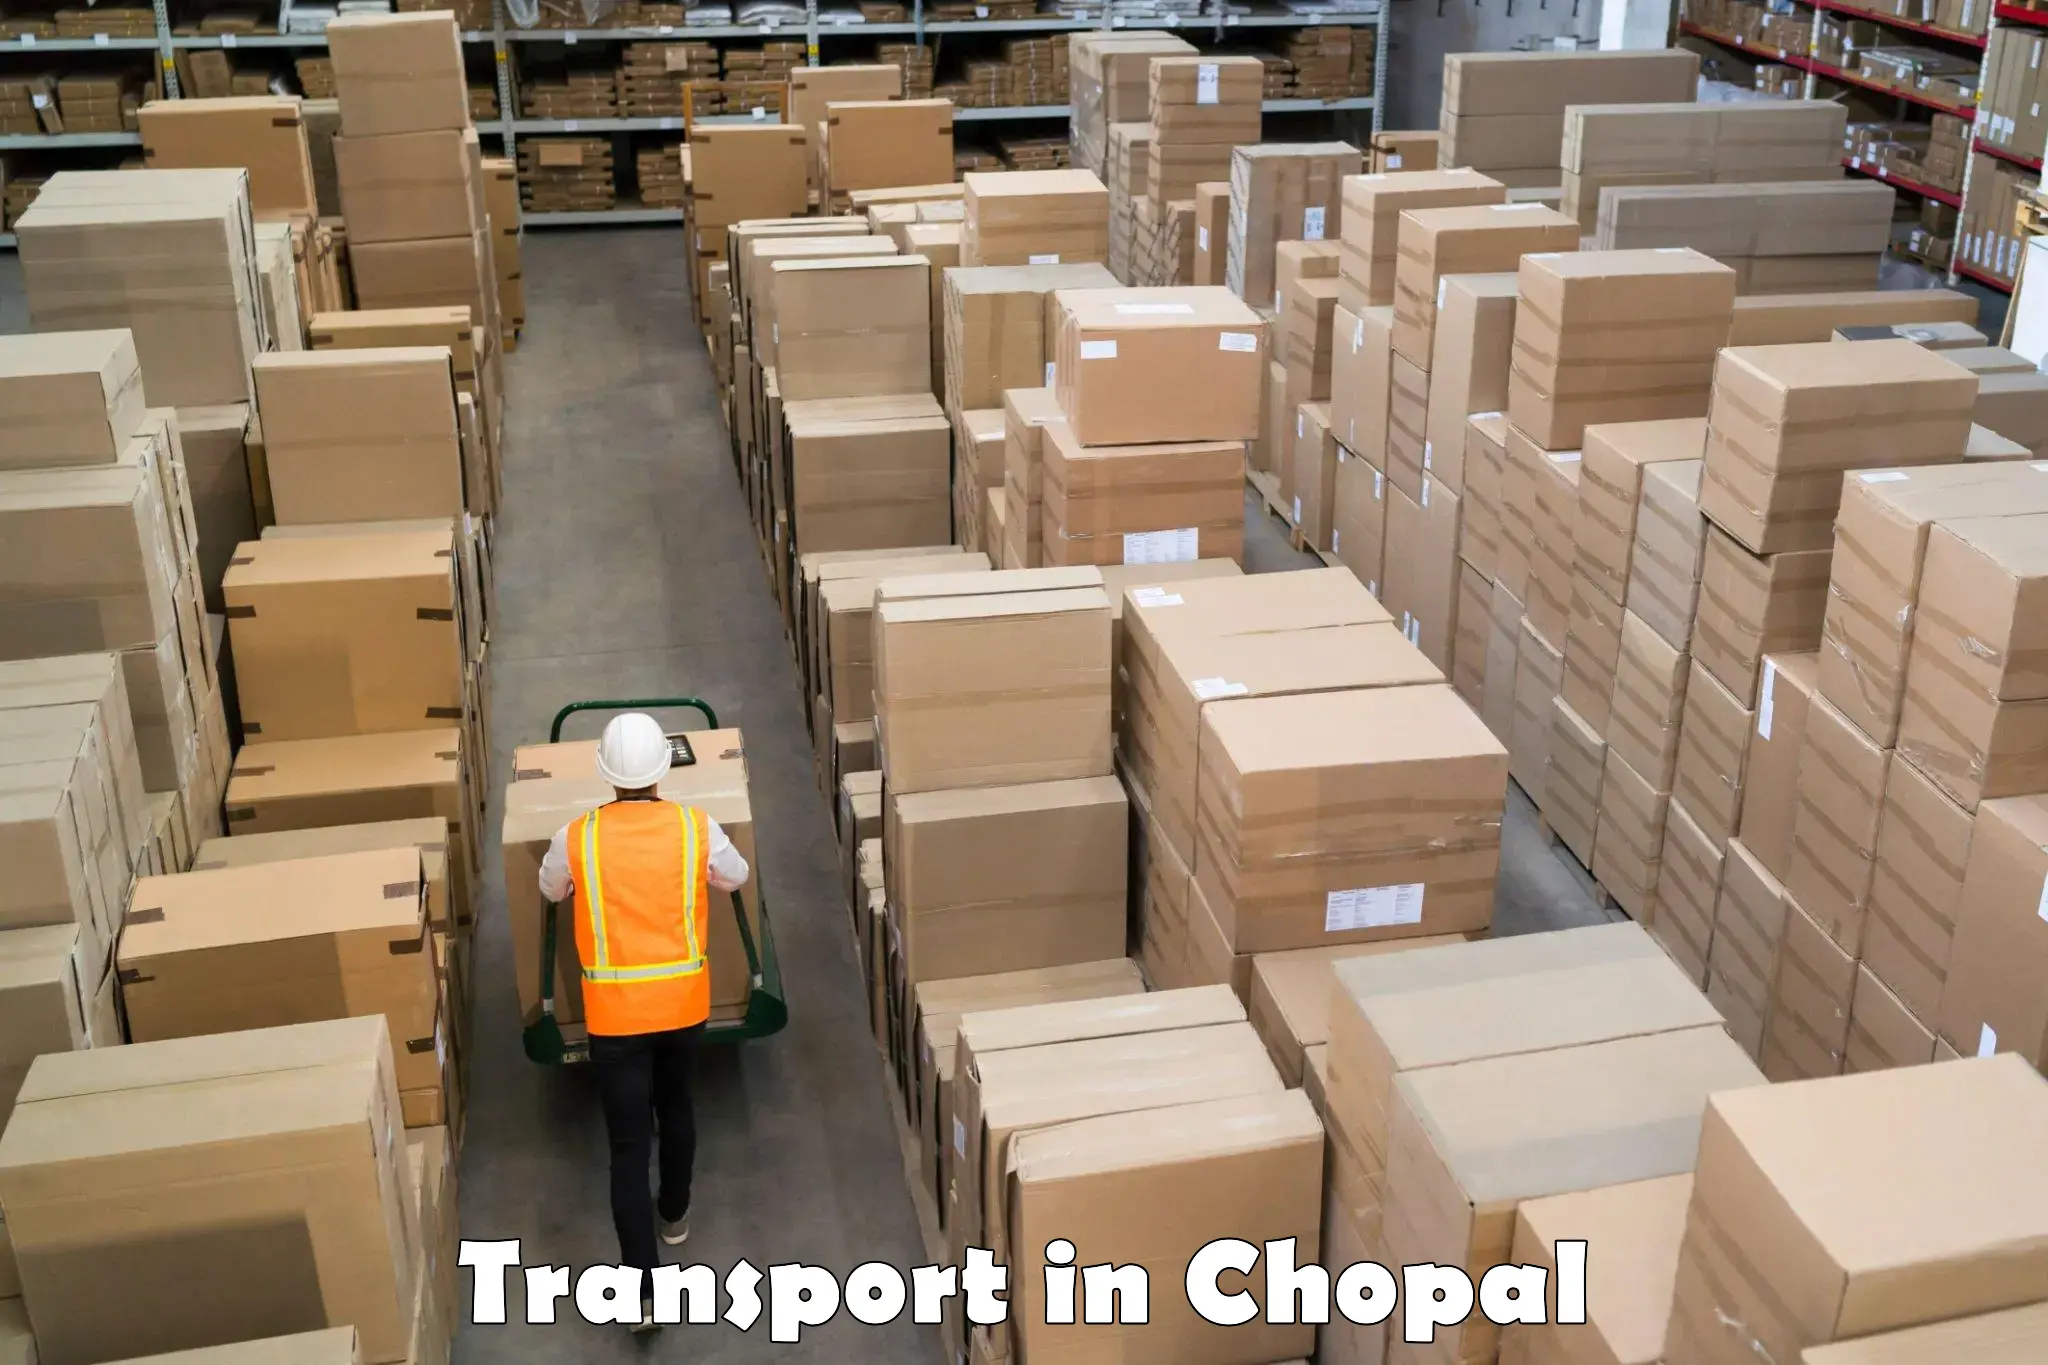 Interstate goods transport in Chopal